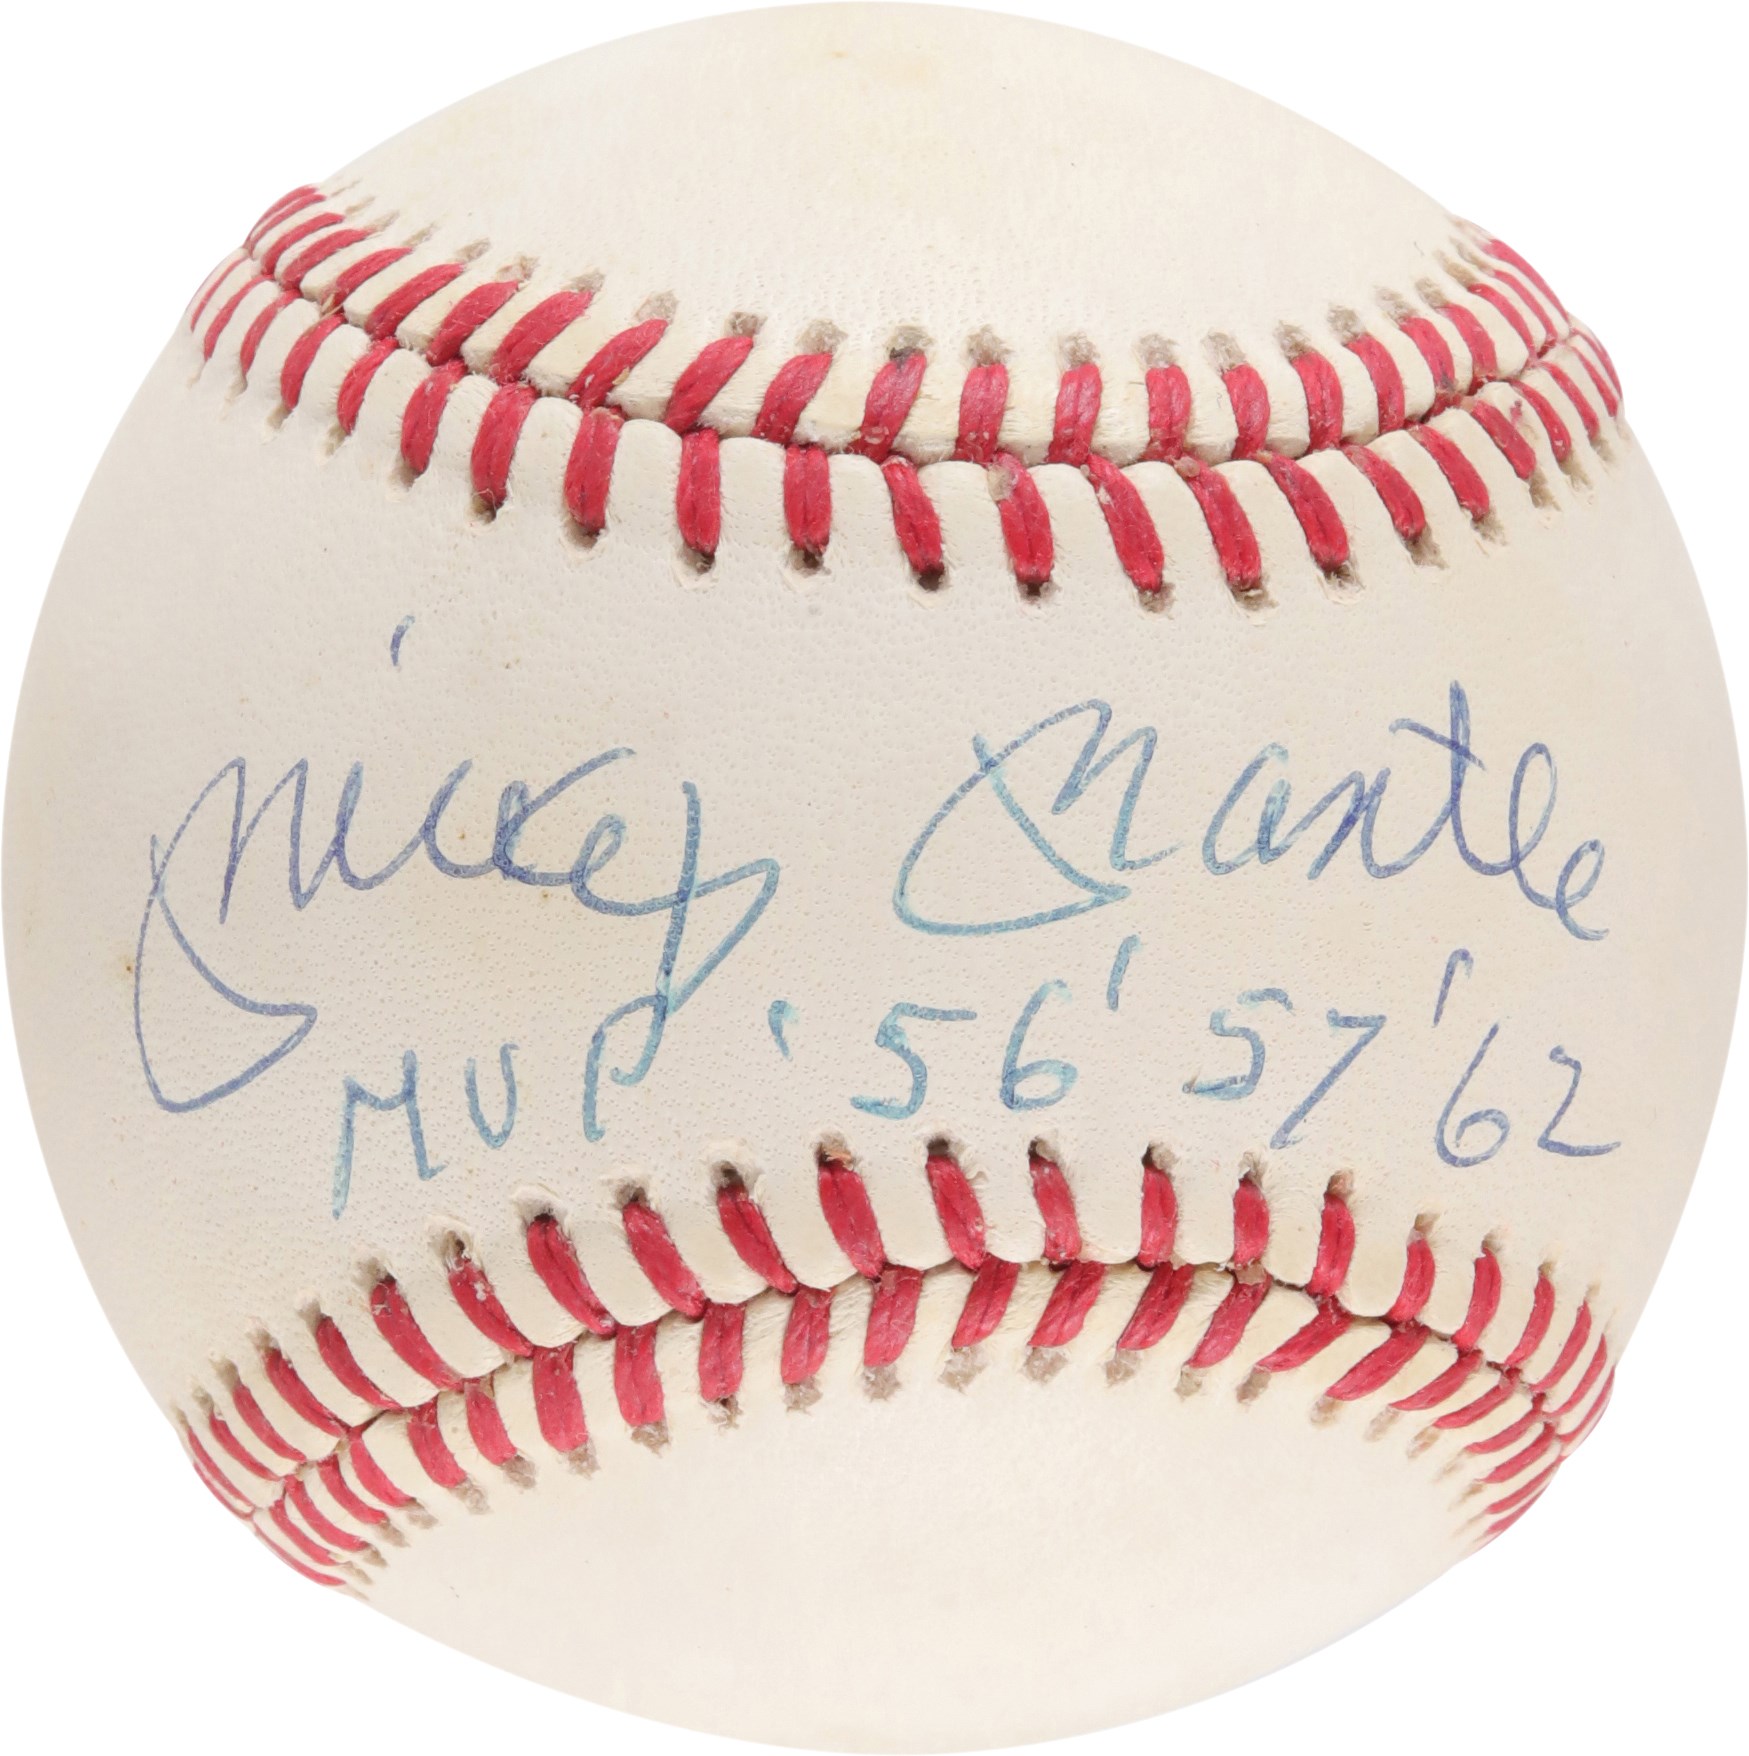 Baseball Autographs - Mickey Mantle "MVP '56 '57 '62" Single-Signed Baseball (PSA)